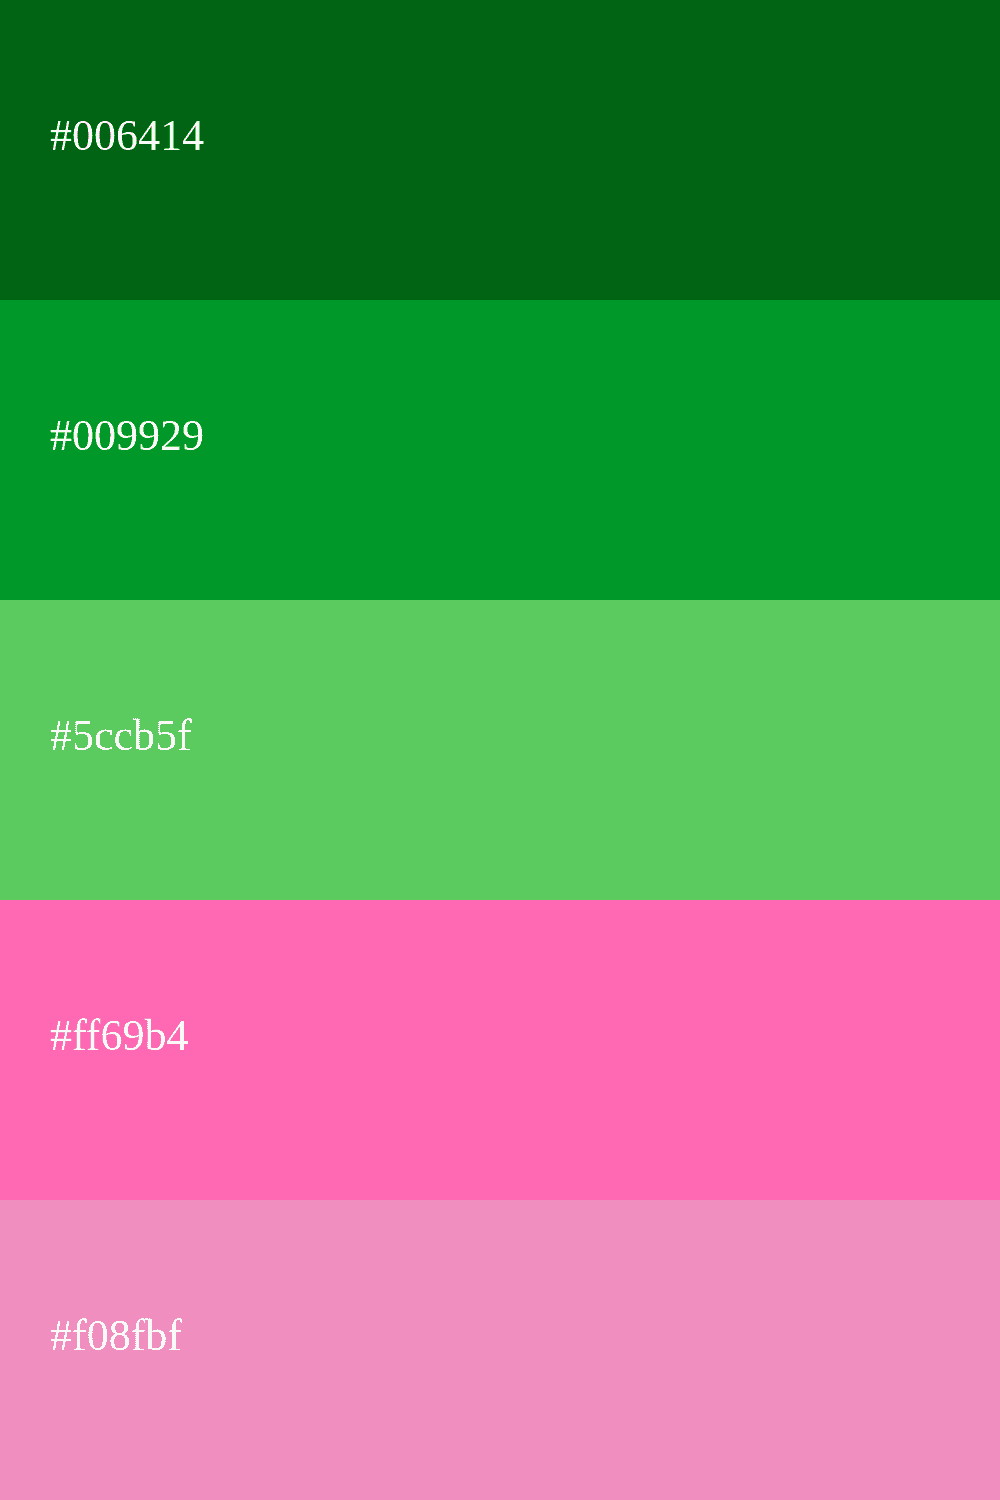 cor verde e rosa